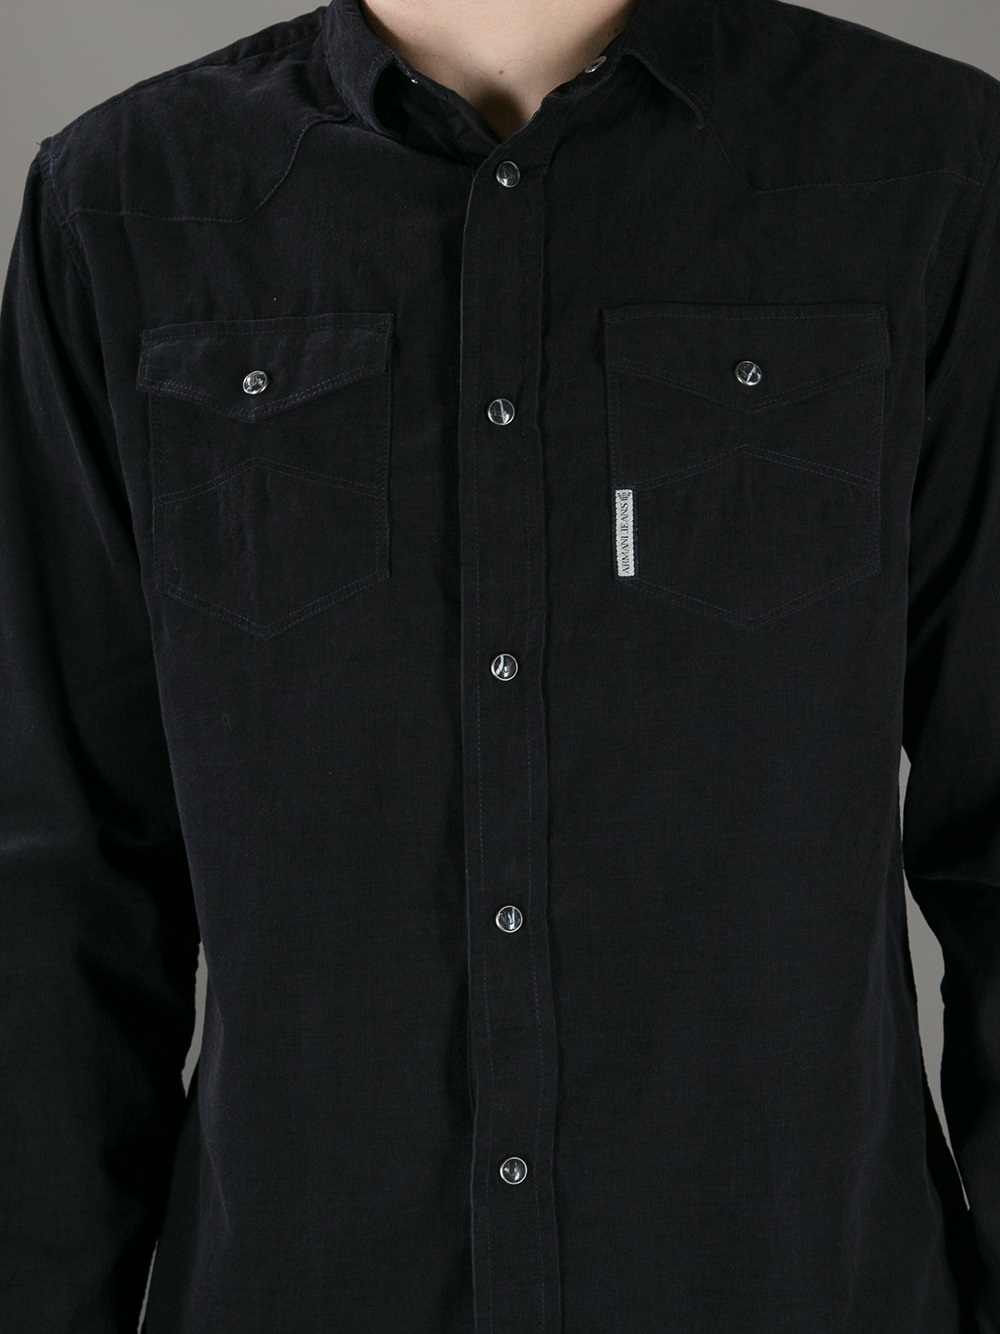 Armani Jeans Corduroy Shirt in Black for Men - Lyst